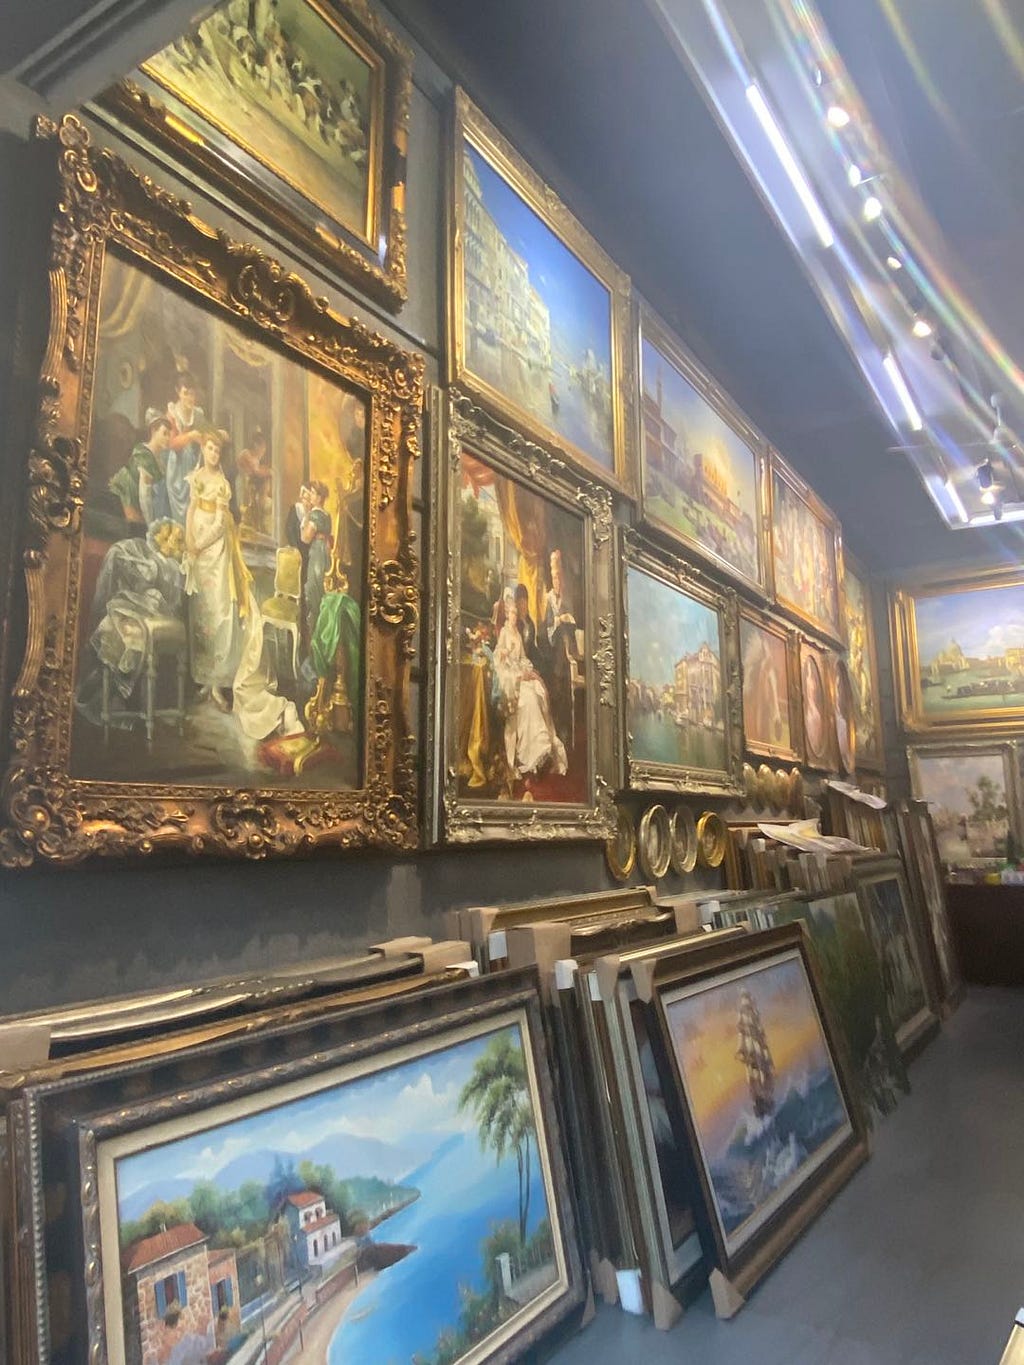 A gallery selling western oil paintings